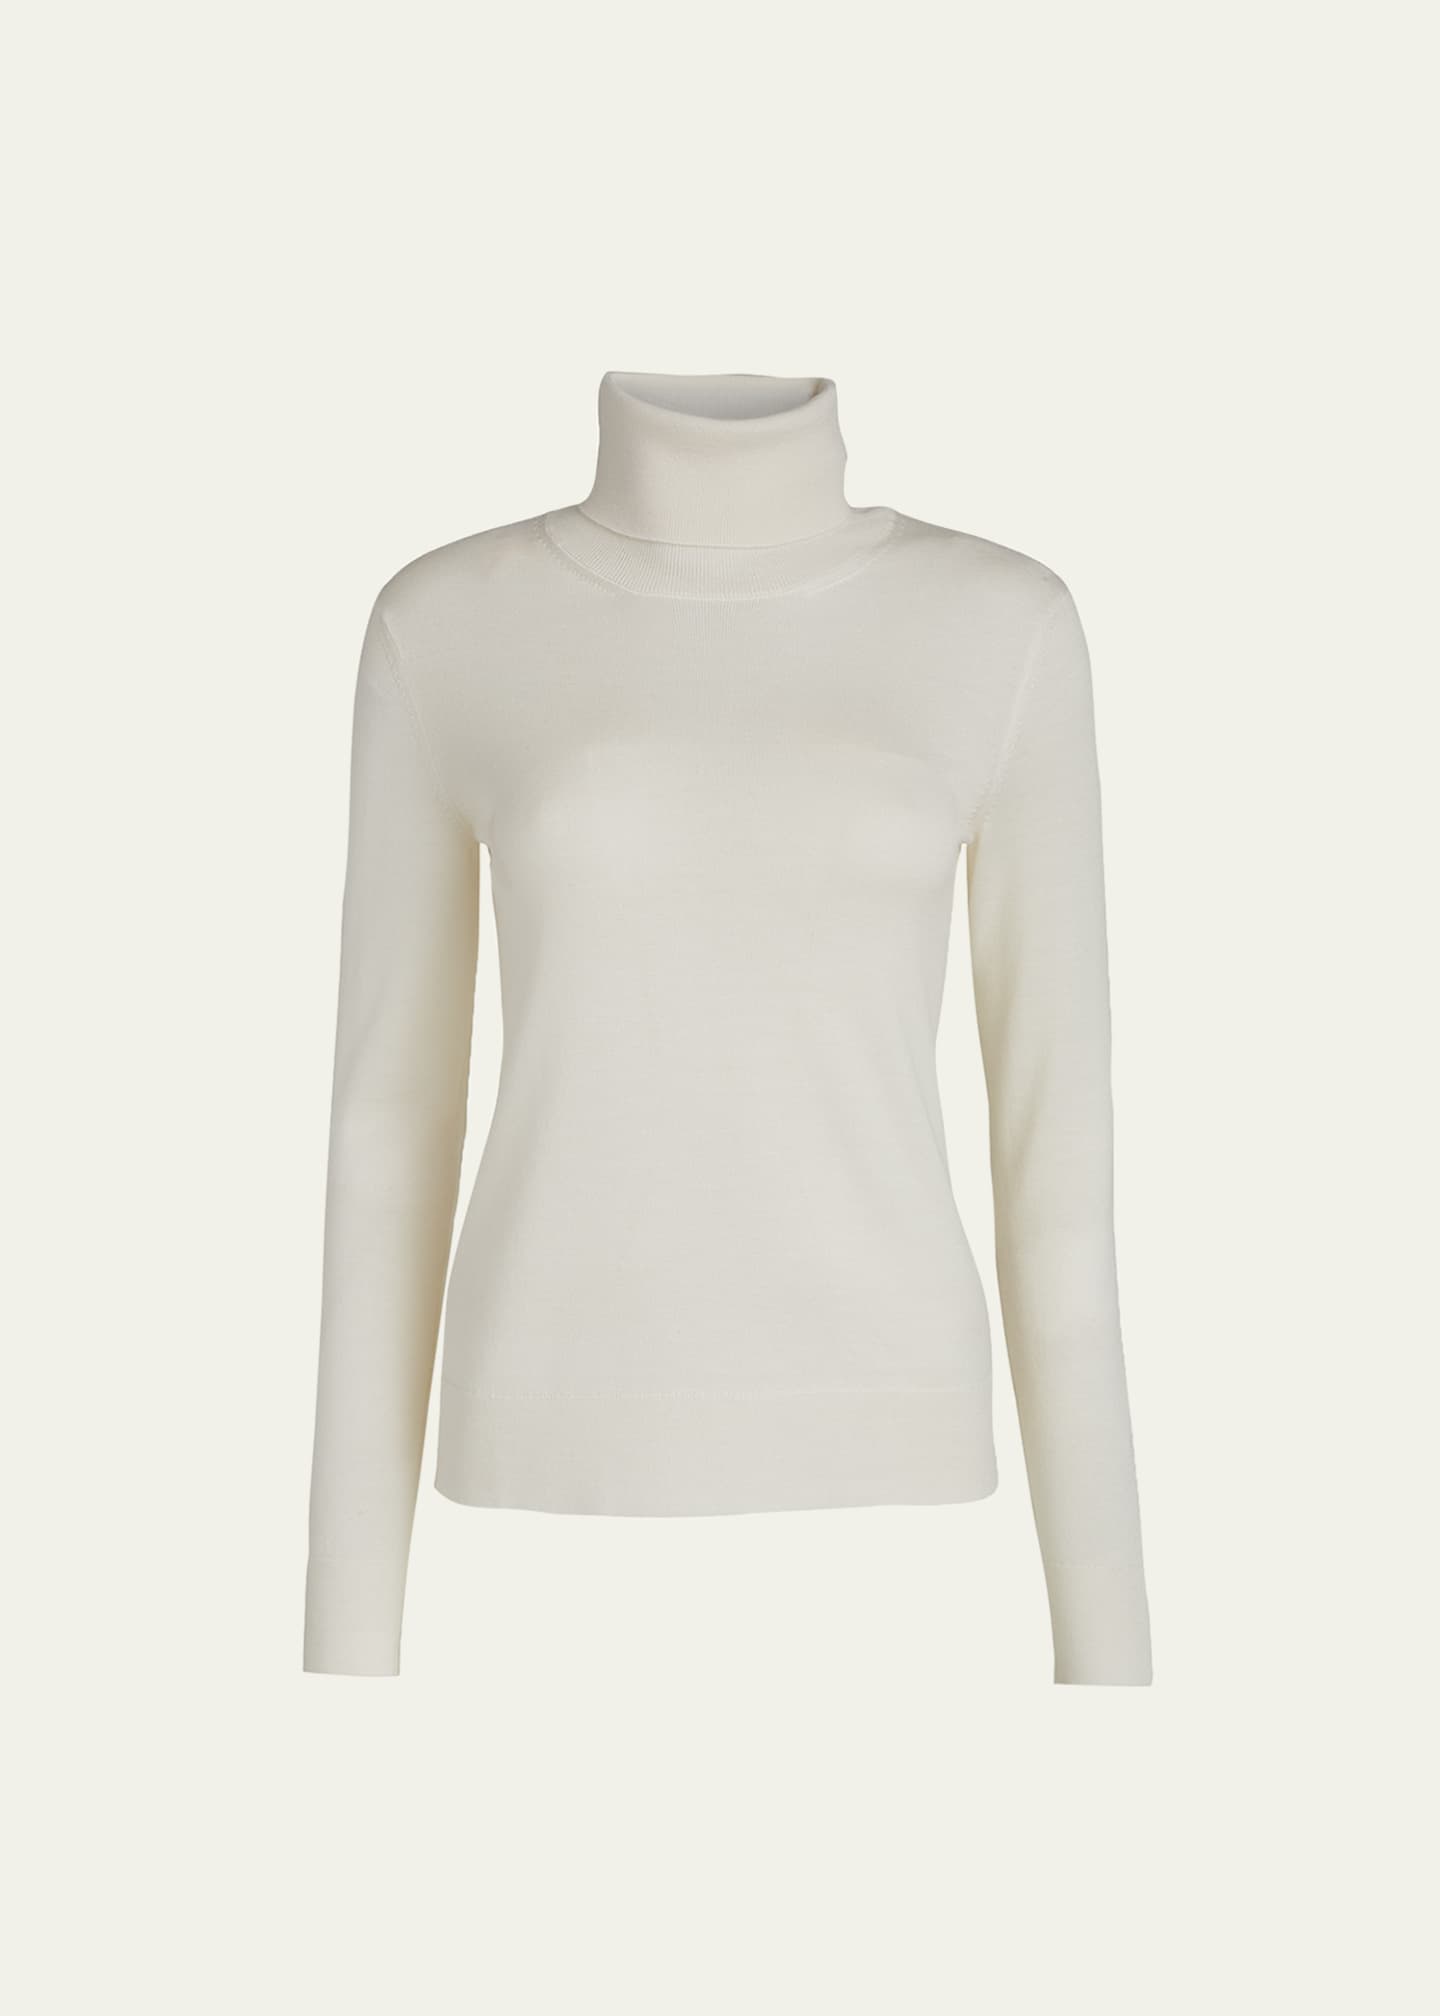 Ralph Lauren Cashmere Long-Sleeve Turtleneck Sweater